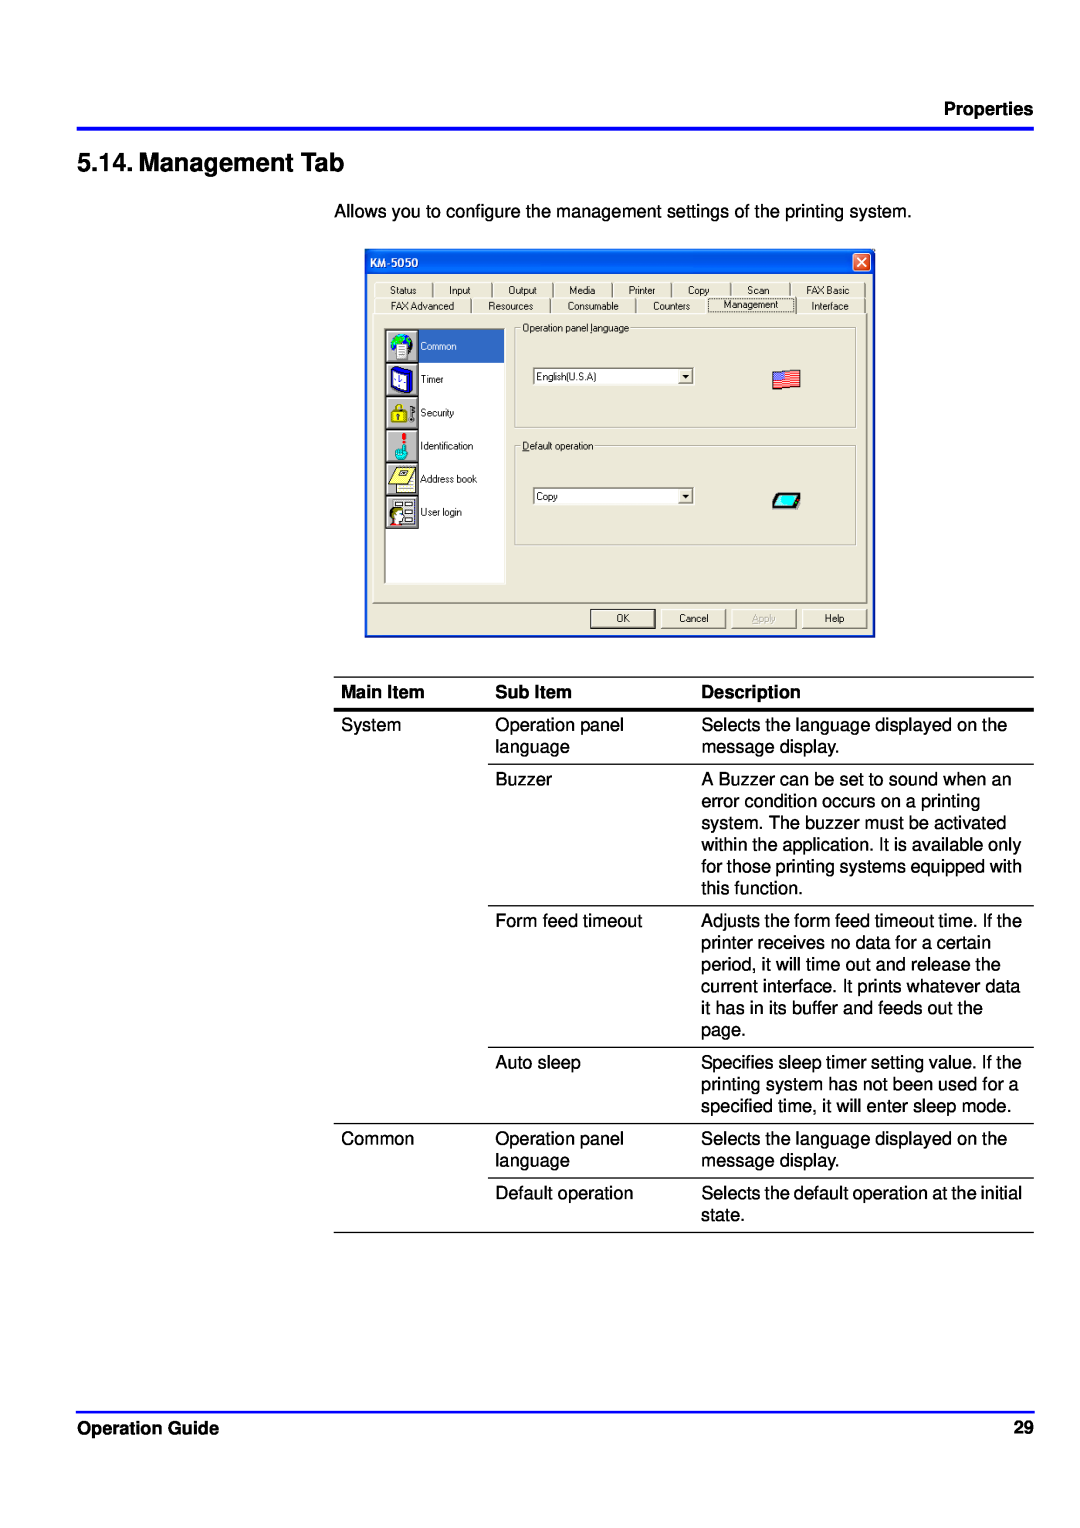 Kyocera KM-NET manual Management Tab, Properties, Main Item, Sub Item, Description, Operation Guide 